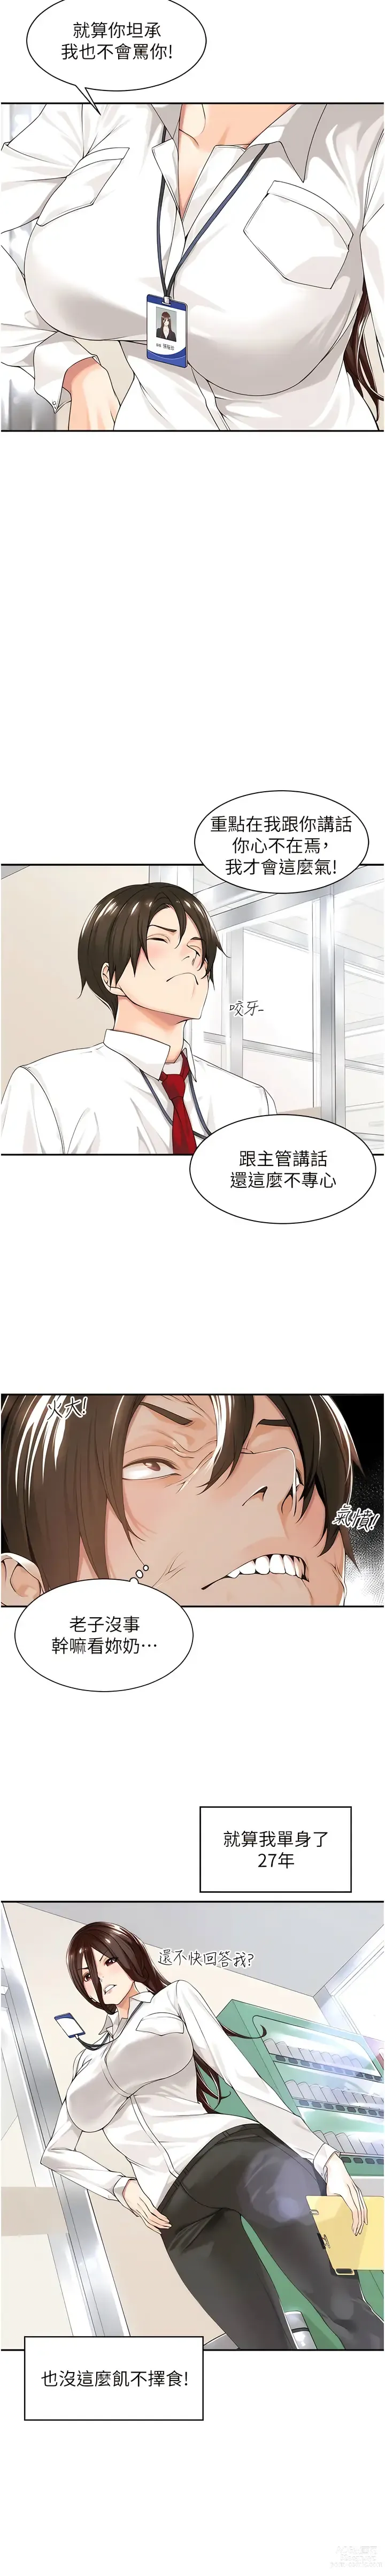 Page 9 of manga 工做狂女上司 1-40 END